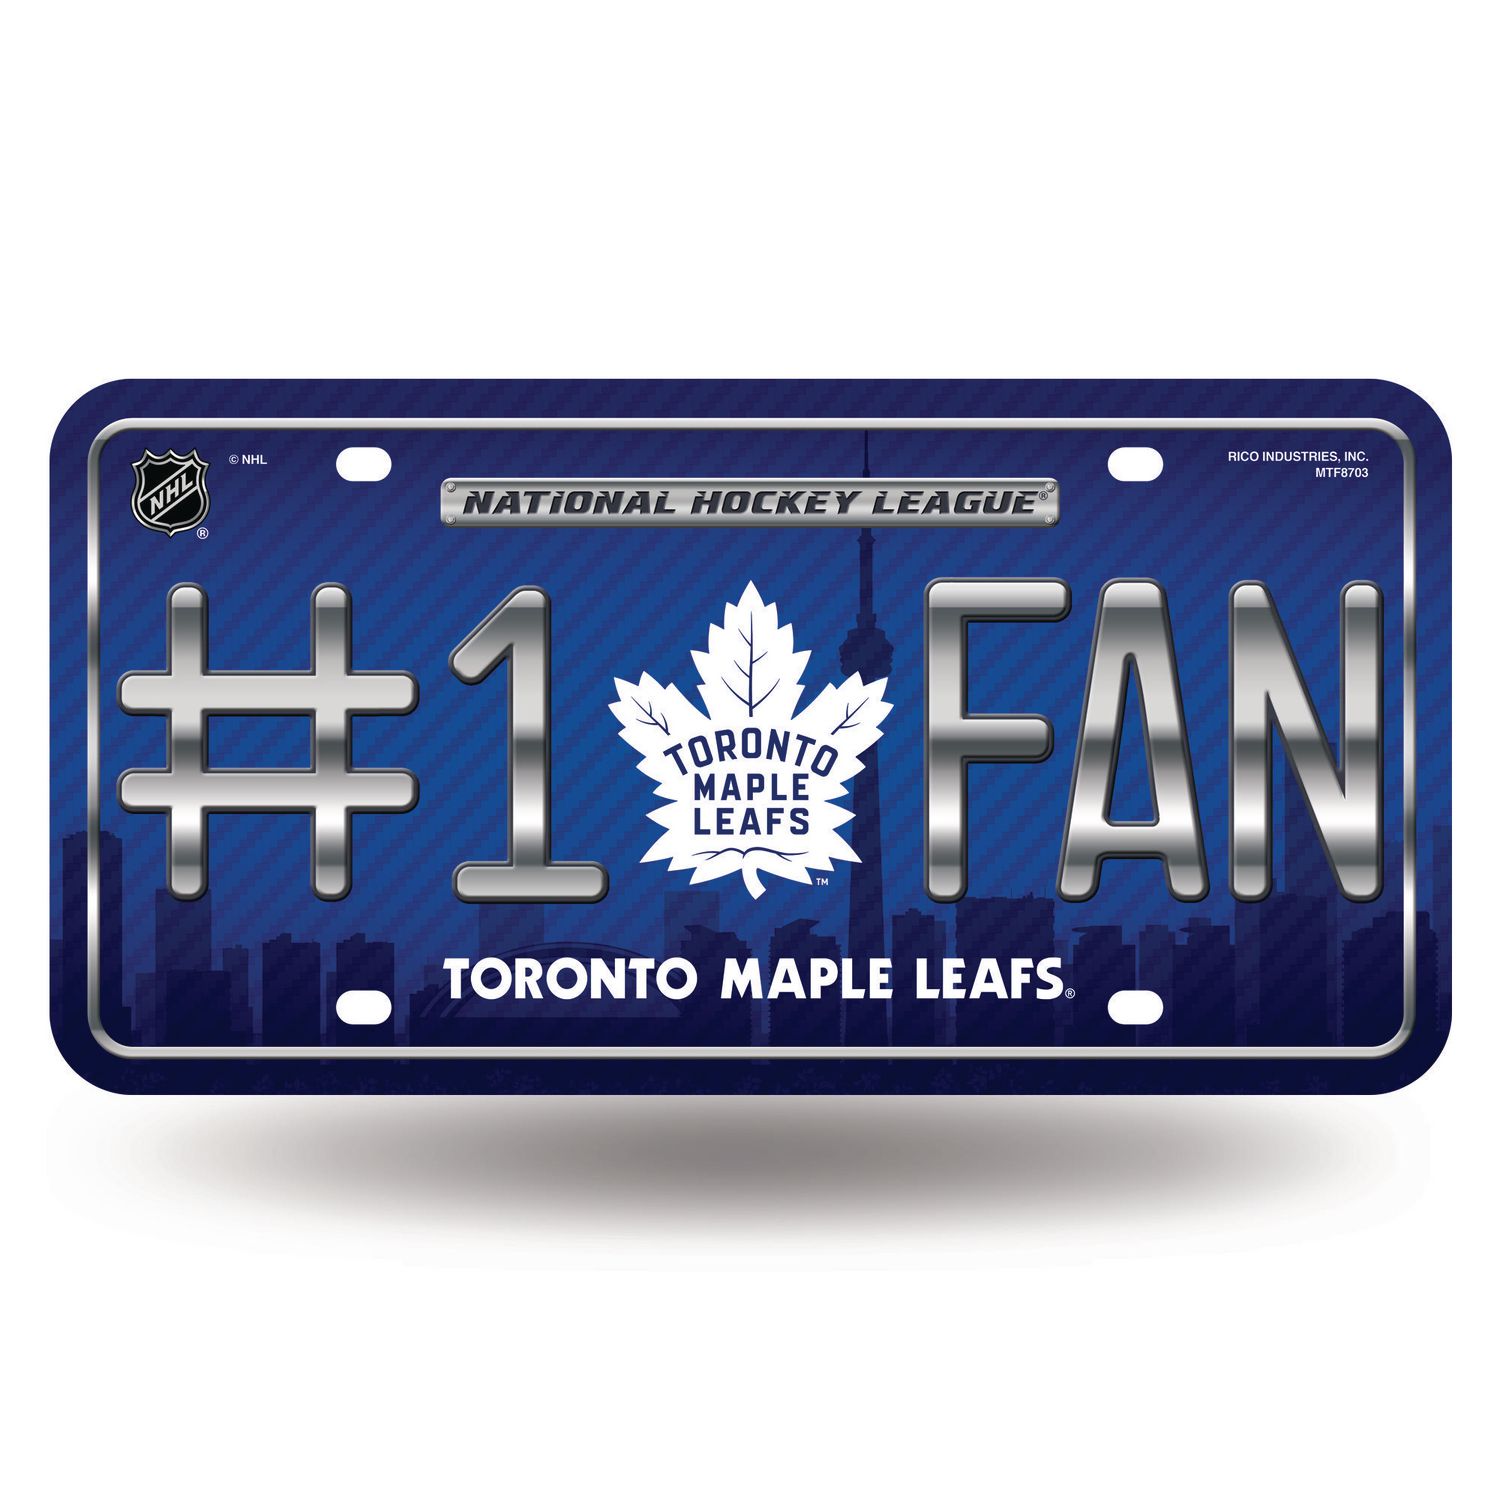 Toronto Maple Leafs 8703 NEW LOGO City Design Metal Aluminum Novelty License Plate Tag Hockey 